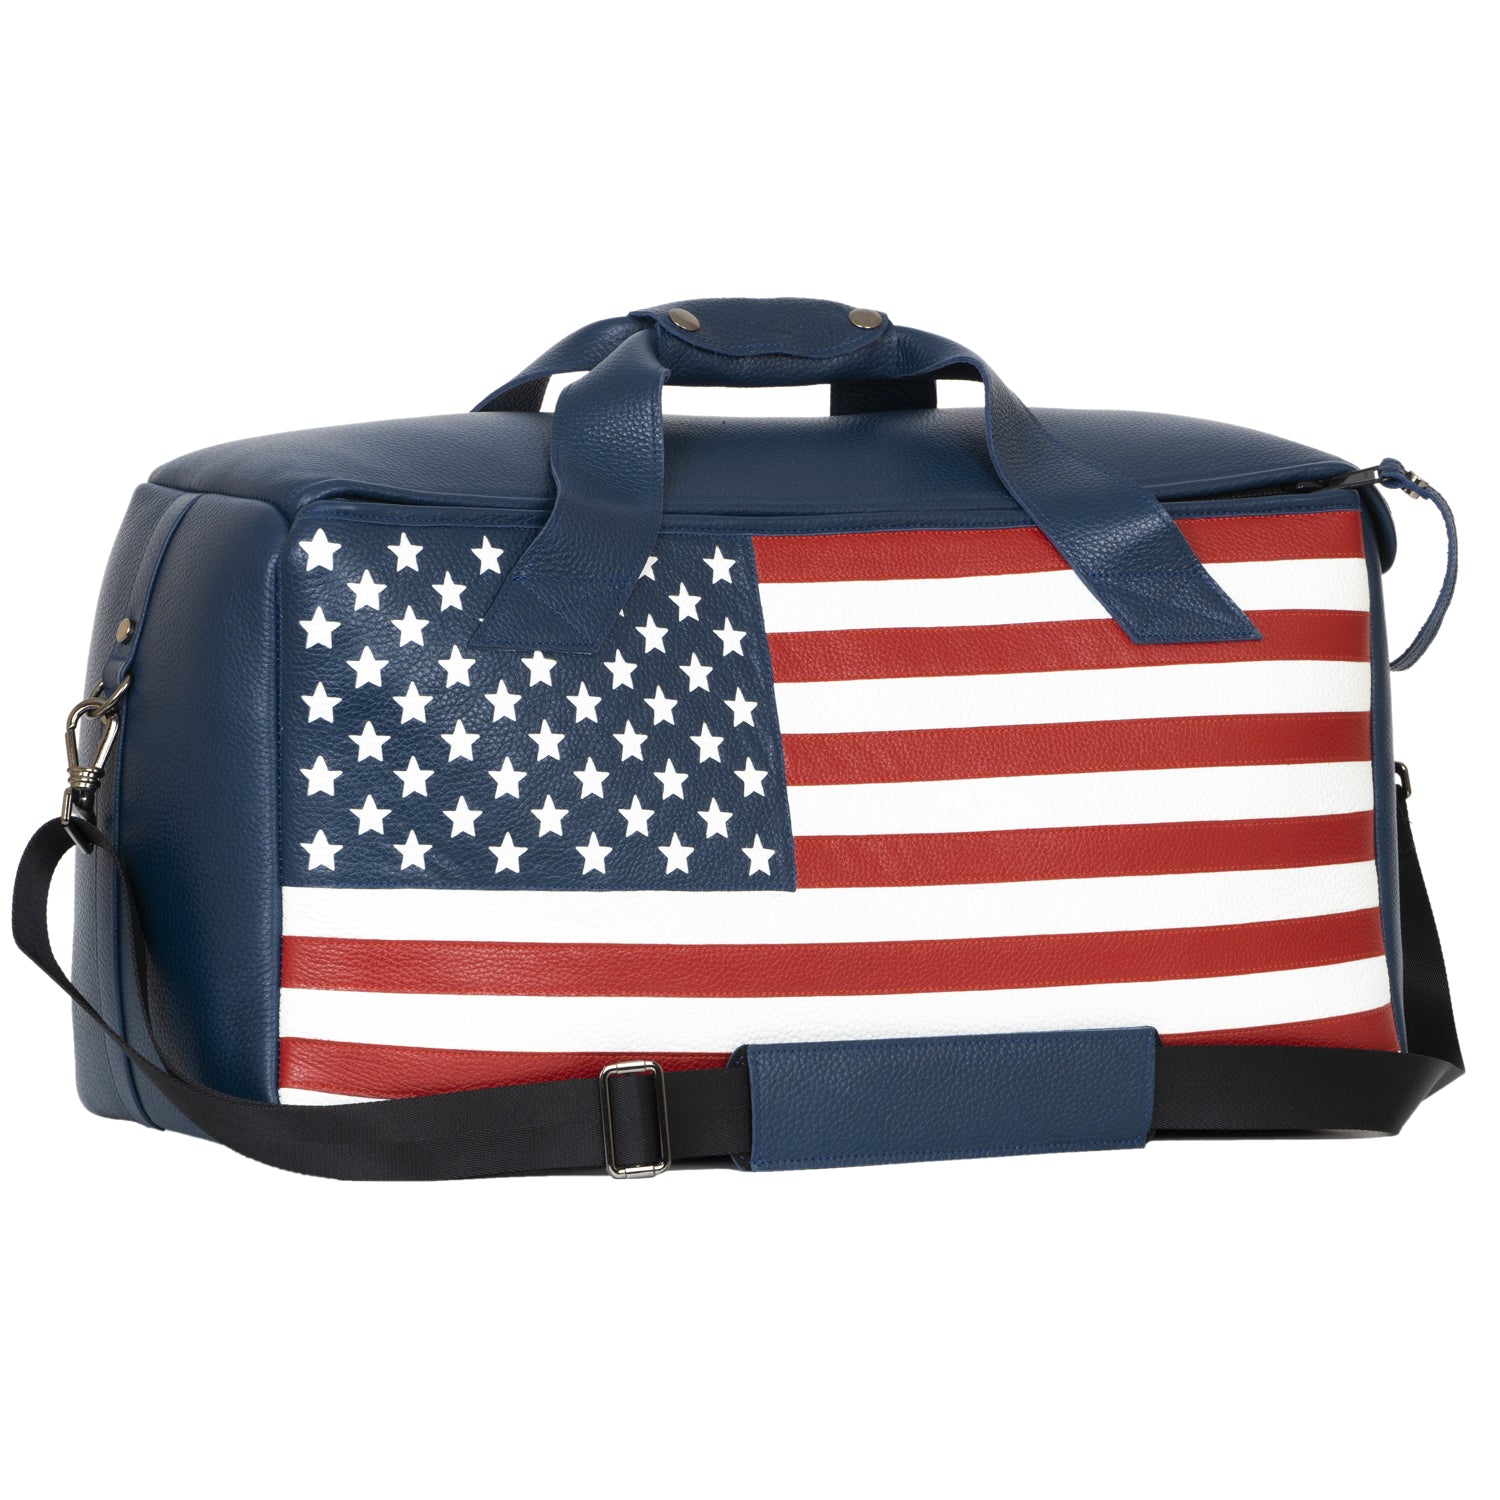 Triple or Double Trumpet/Flugelhorn Gig Bag with US flag in Flotar Leather